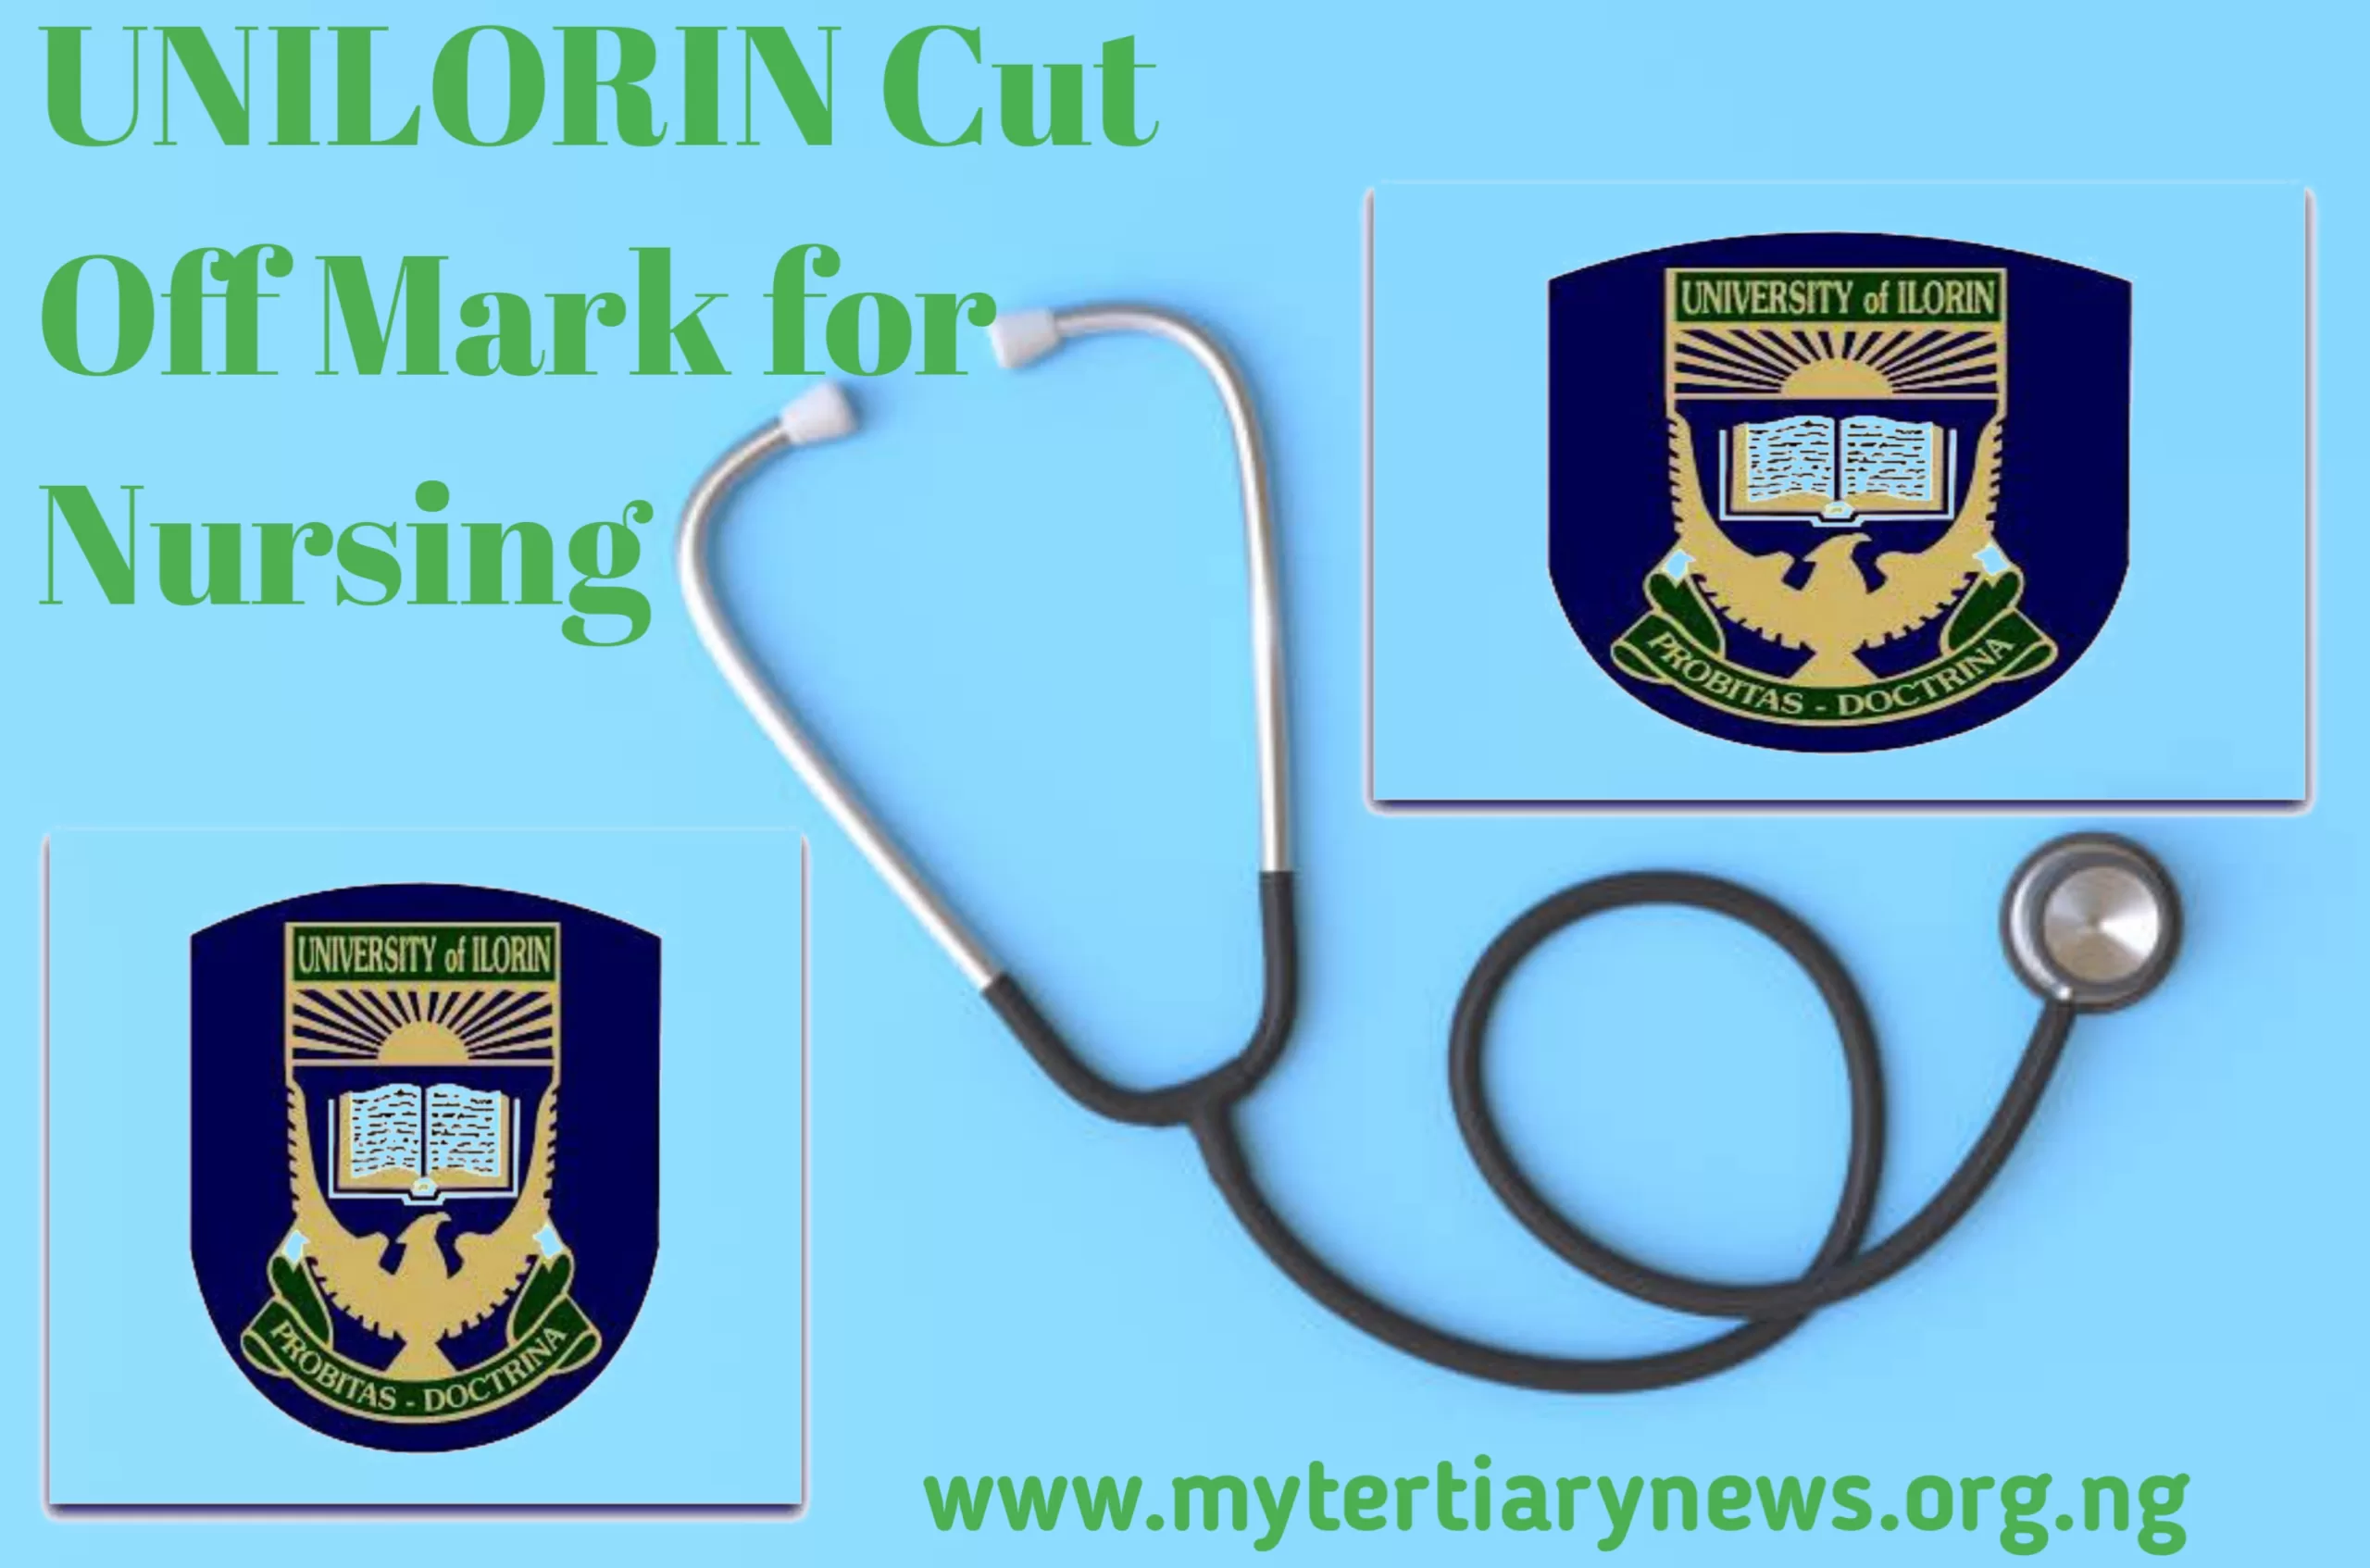 UNILORIN Image || UNILORIN Cut Off Mark for Nursing